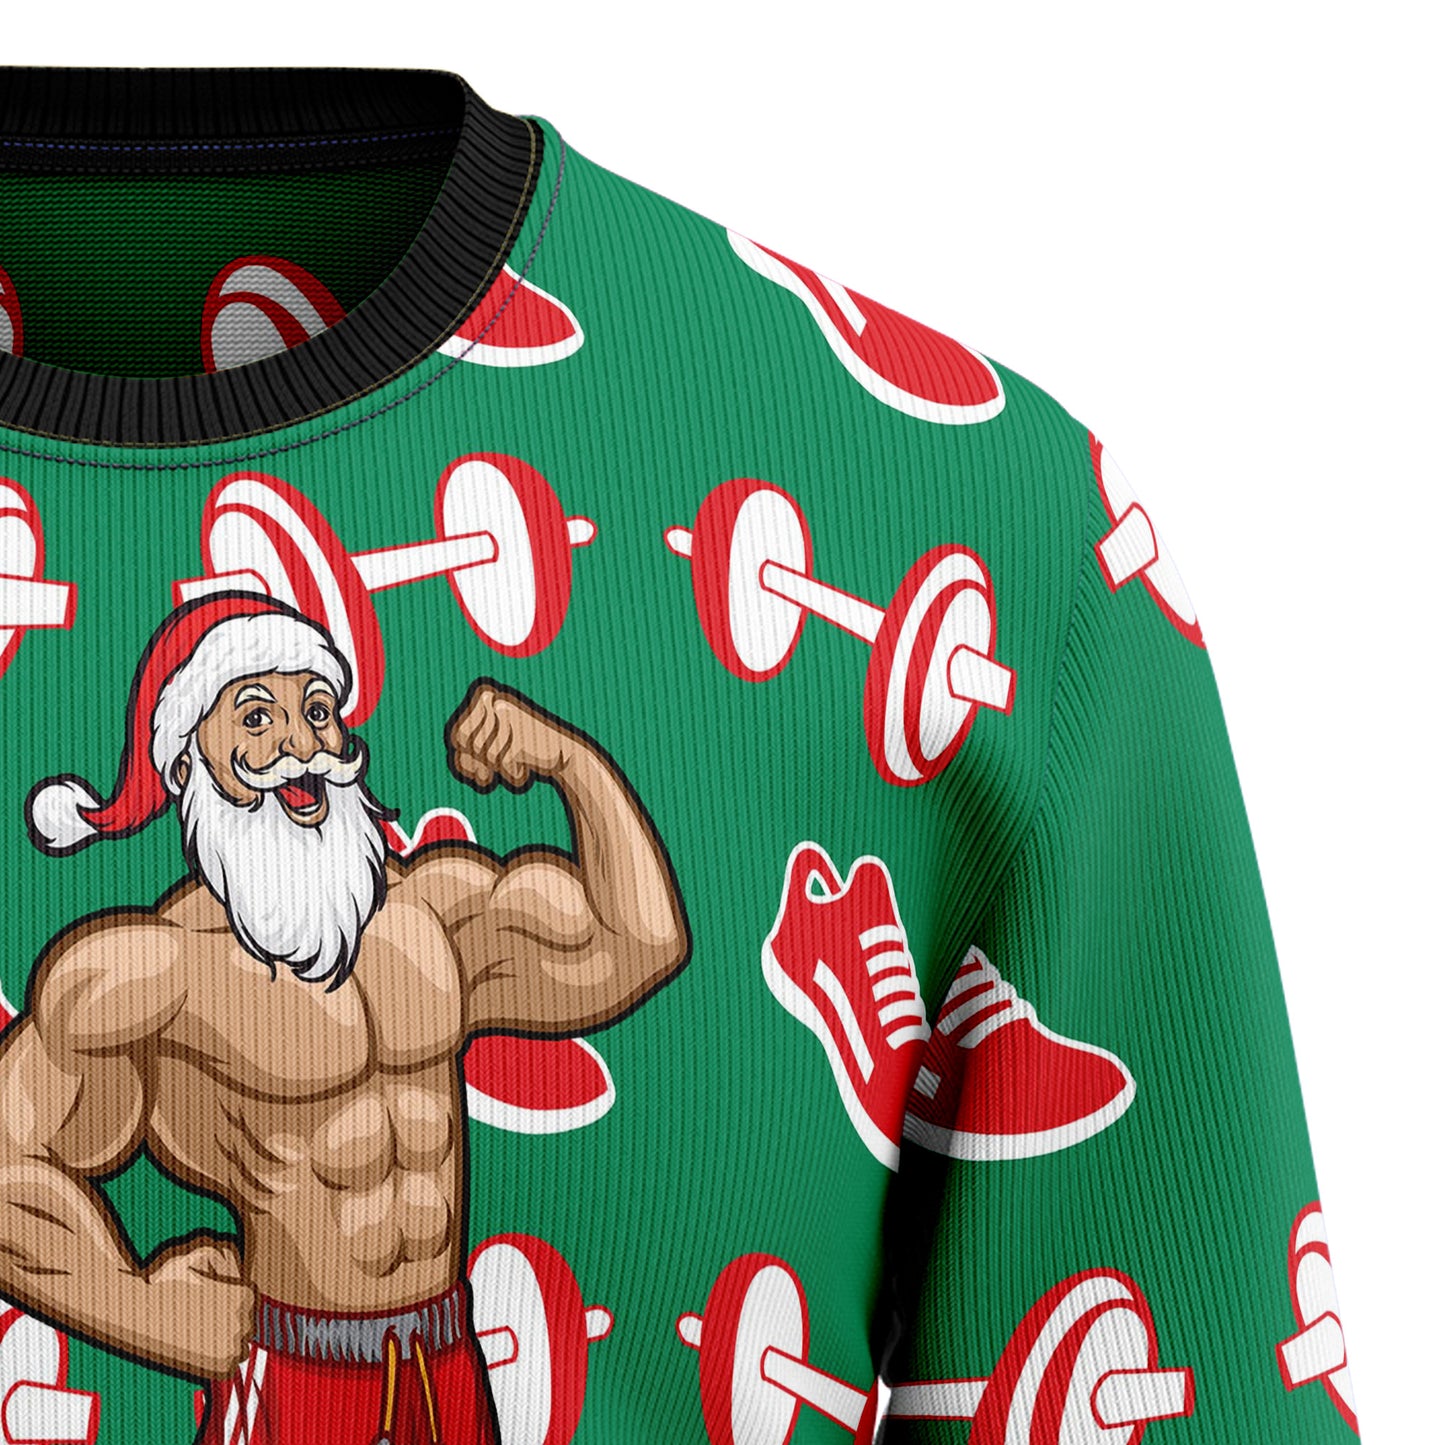 Santa Gym HZ92809 Ugly Christmas Sweater